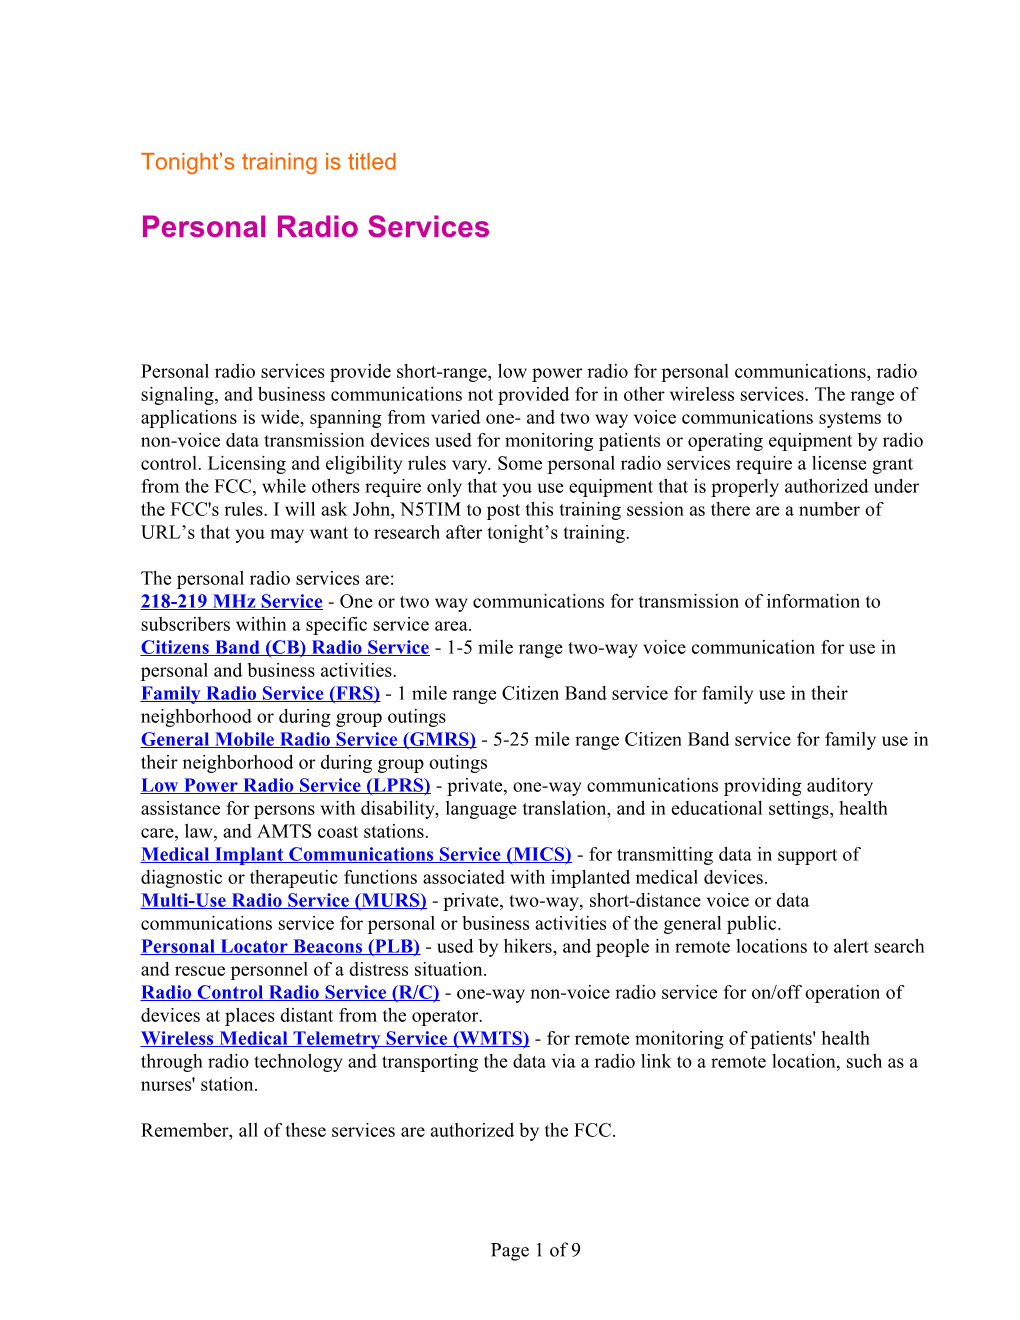 Personal Radio Services